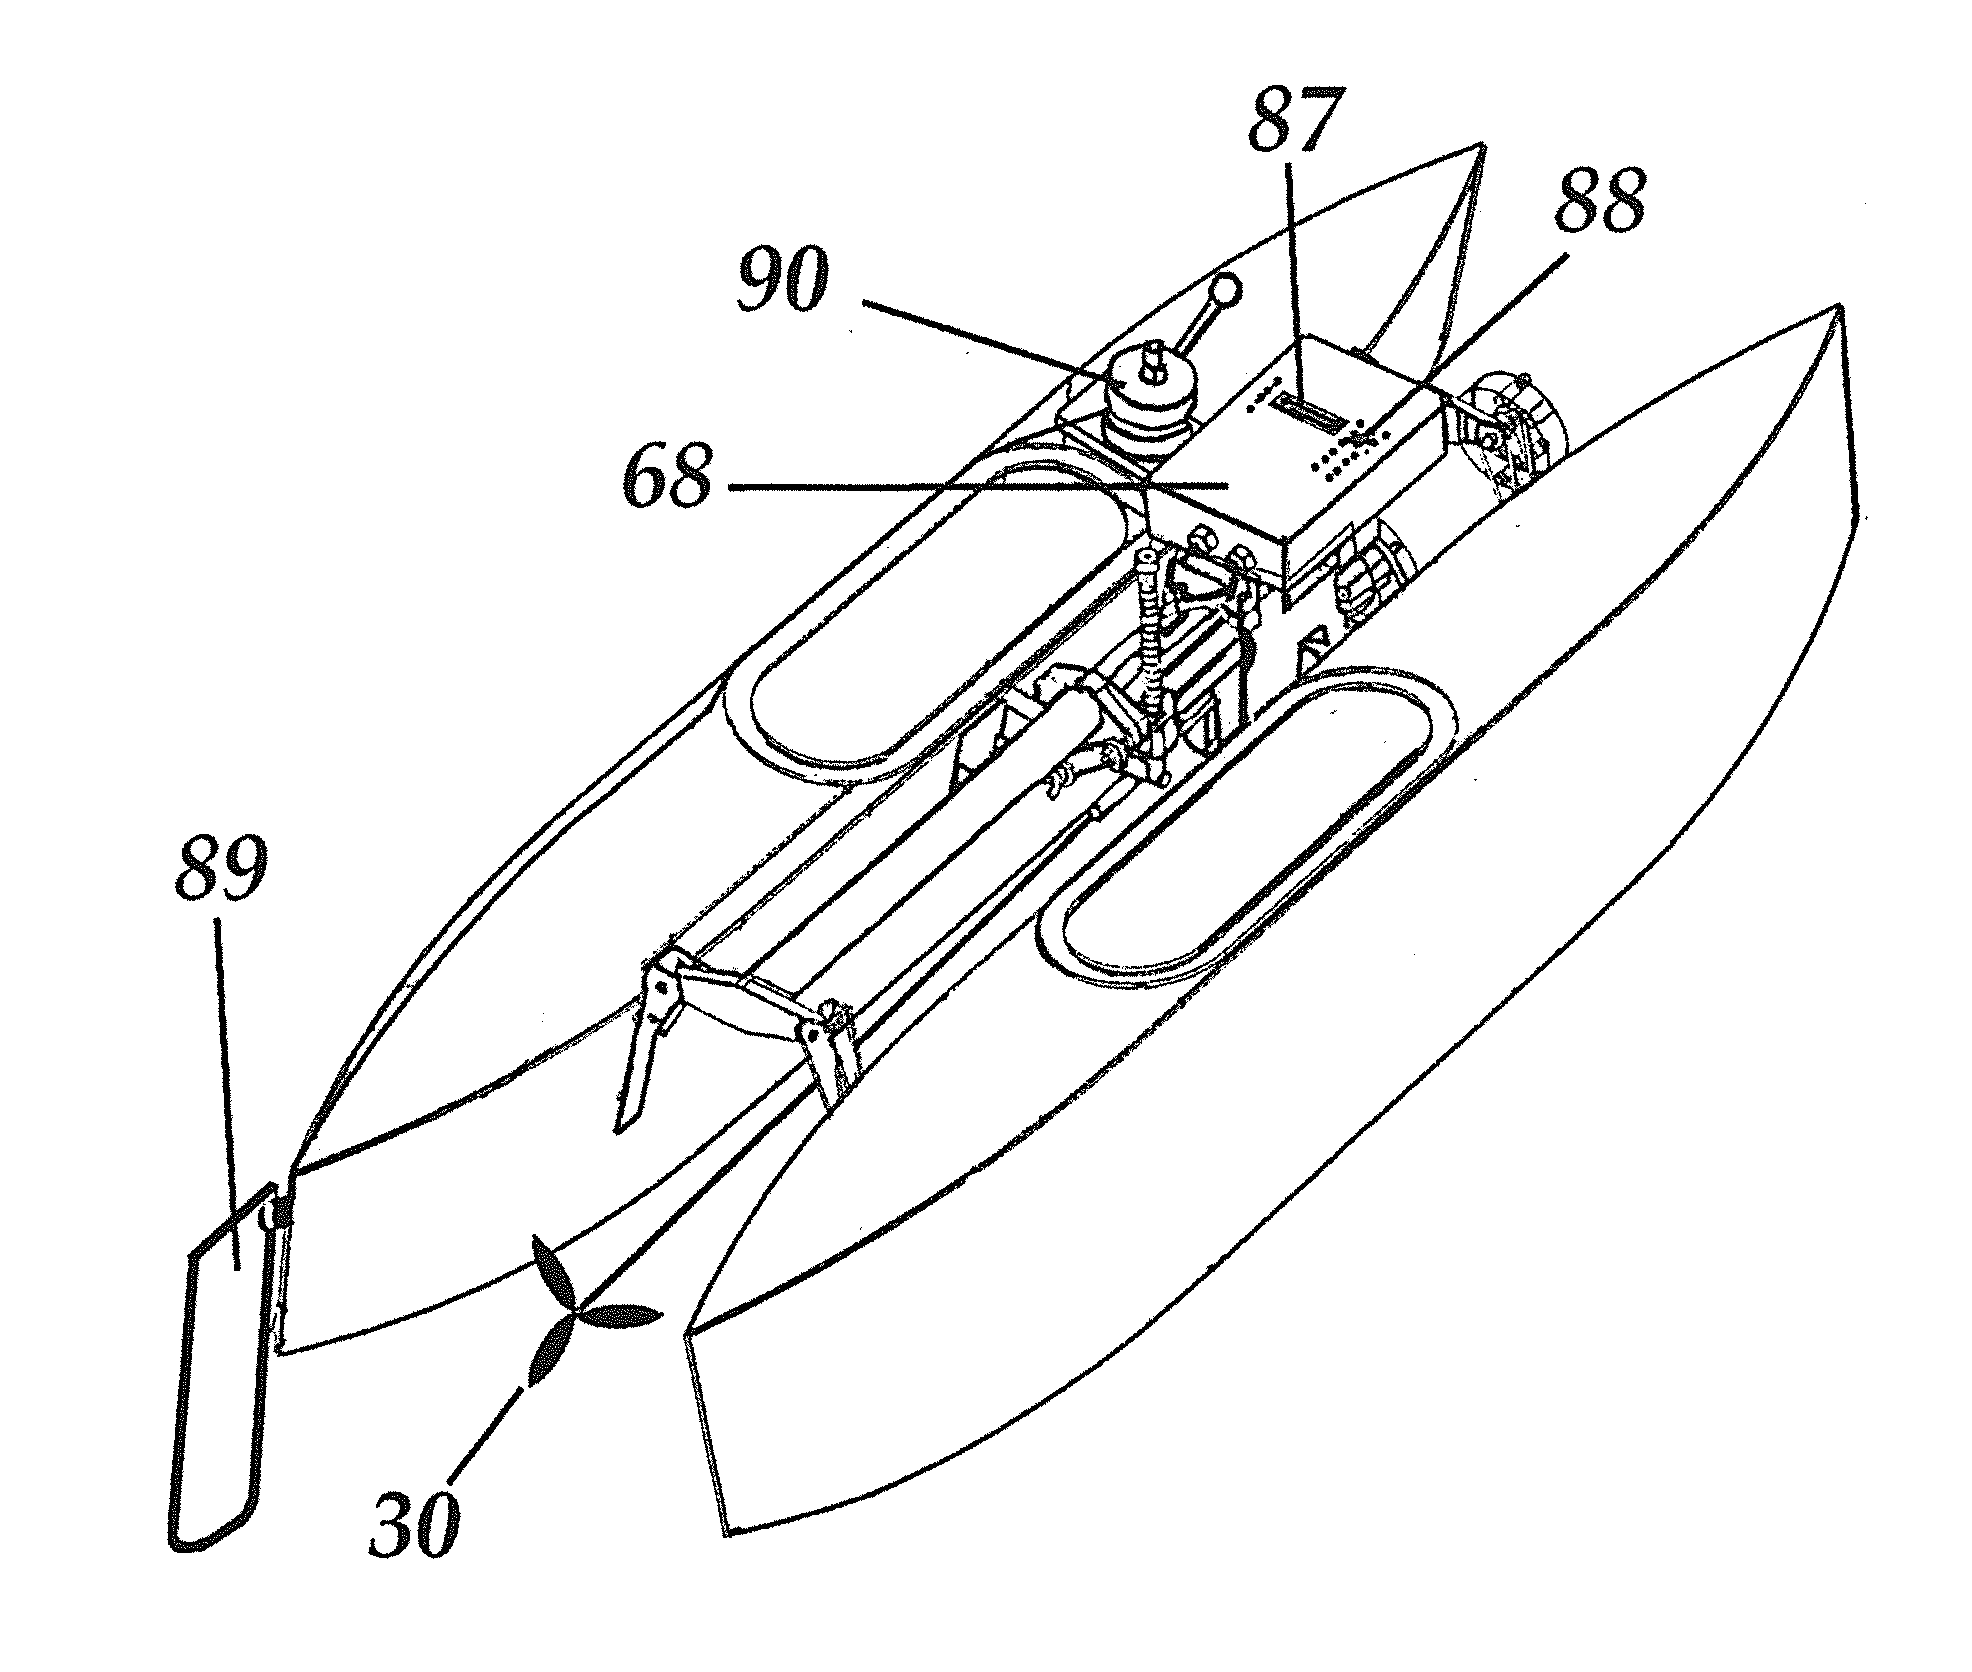 Angular velocity-controlled pontoon  propulsion system